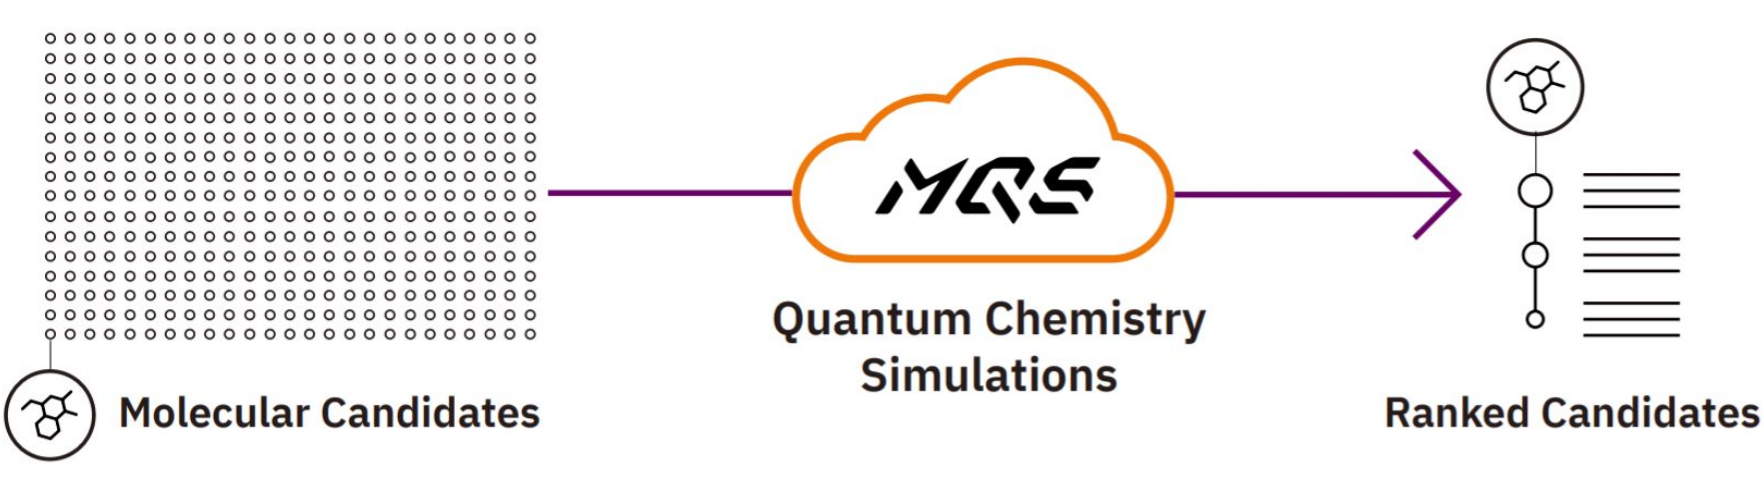 Quantum chemistry platform